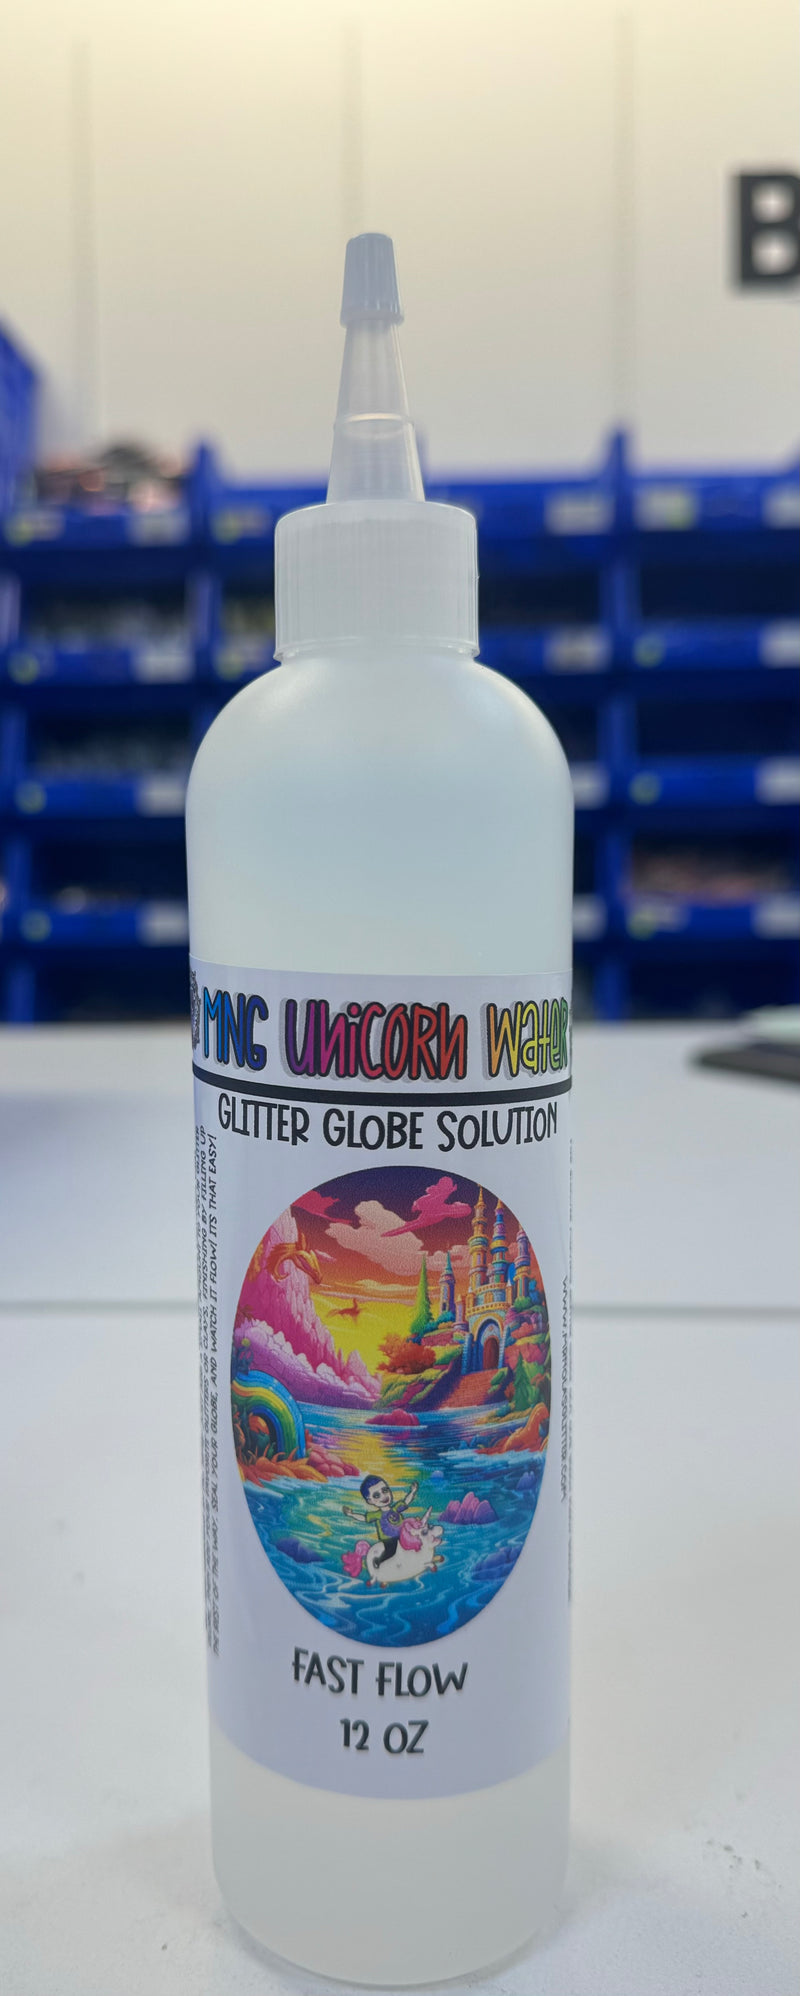 MNG Unicorn Water-Glitter Globe Solution Fast Flow